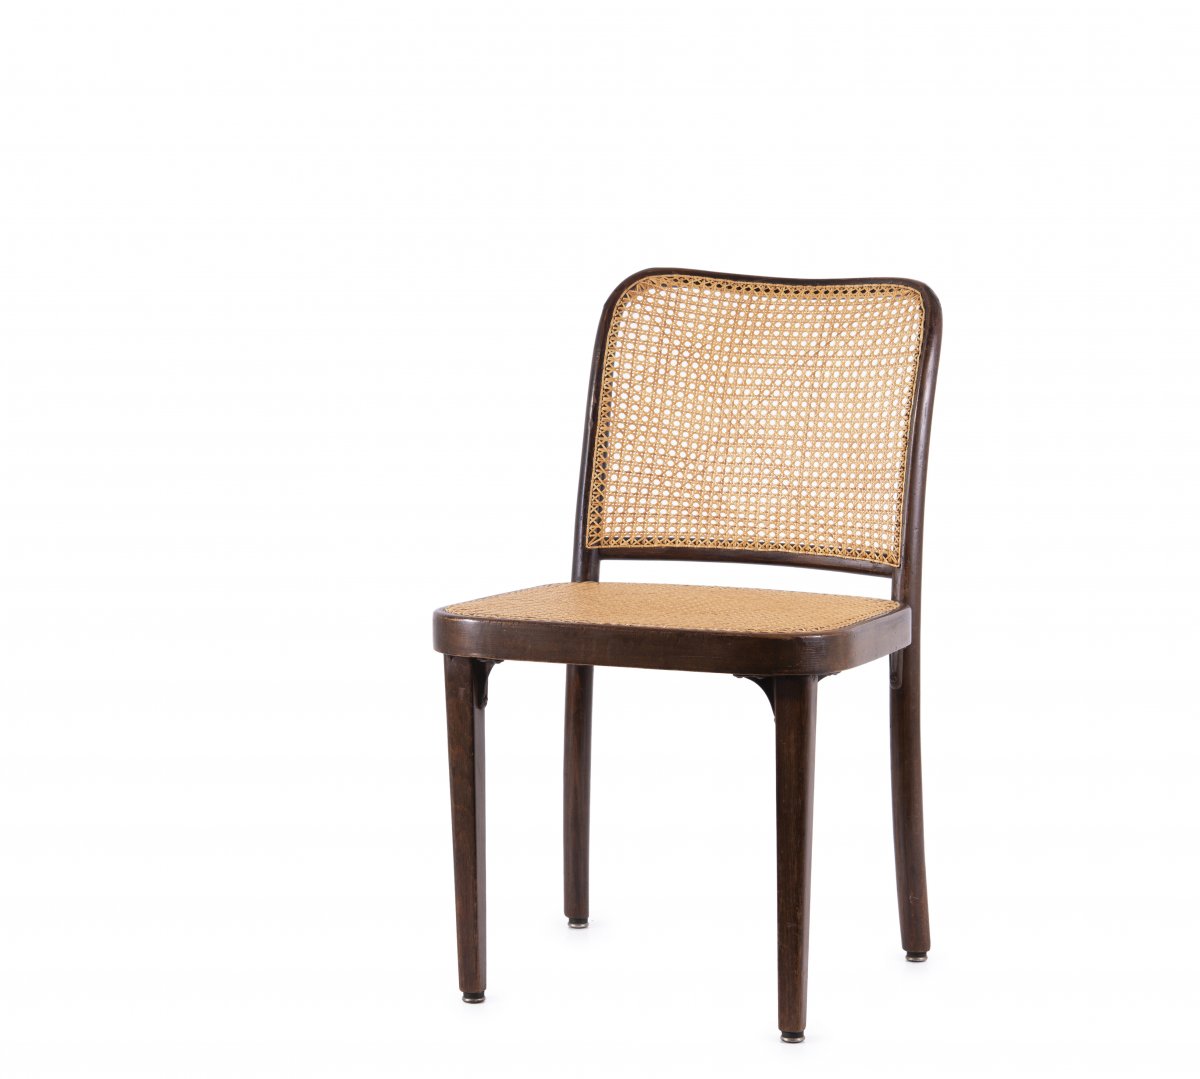 Josef Hoffmann, 'A 811' chair, 1930'A 811' chair, 1930H. 74,5 x 55 x 45,5 cm. Made by Thonet, - Image 4 of 11